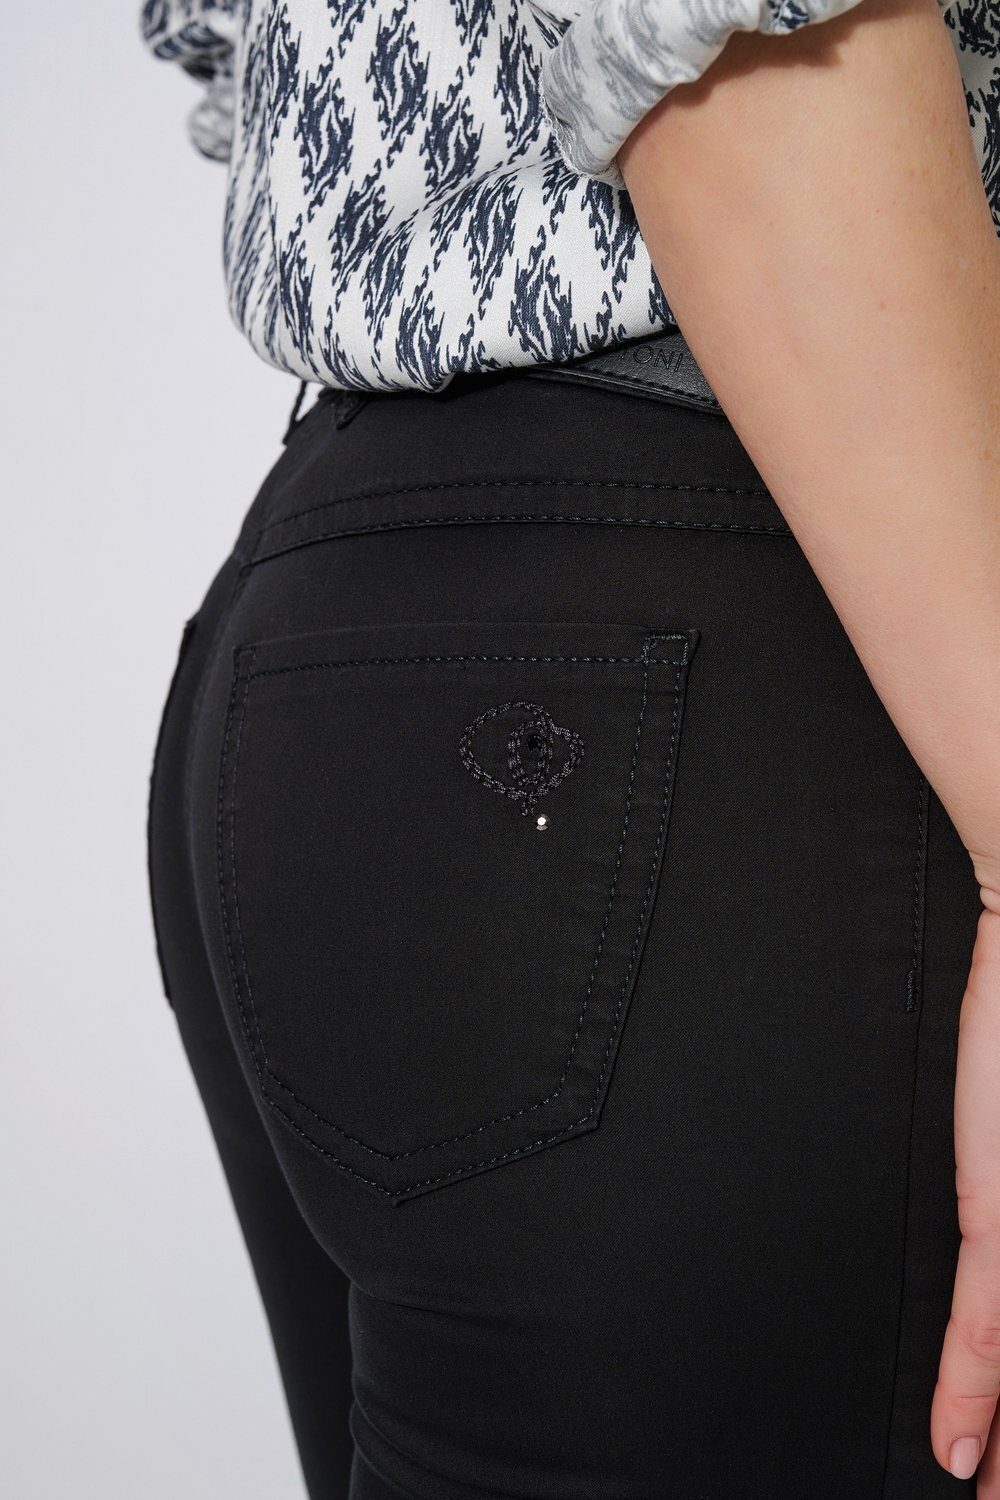 Shape Perfect - TONI schwarz softer aus 5-Pocket-Hose 089 Baumwolle